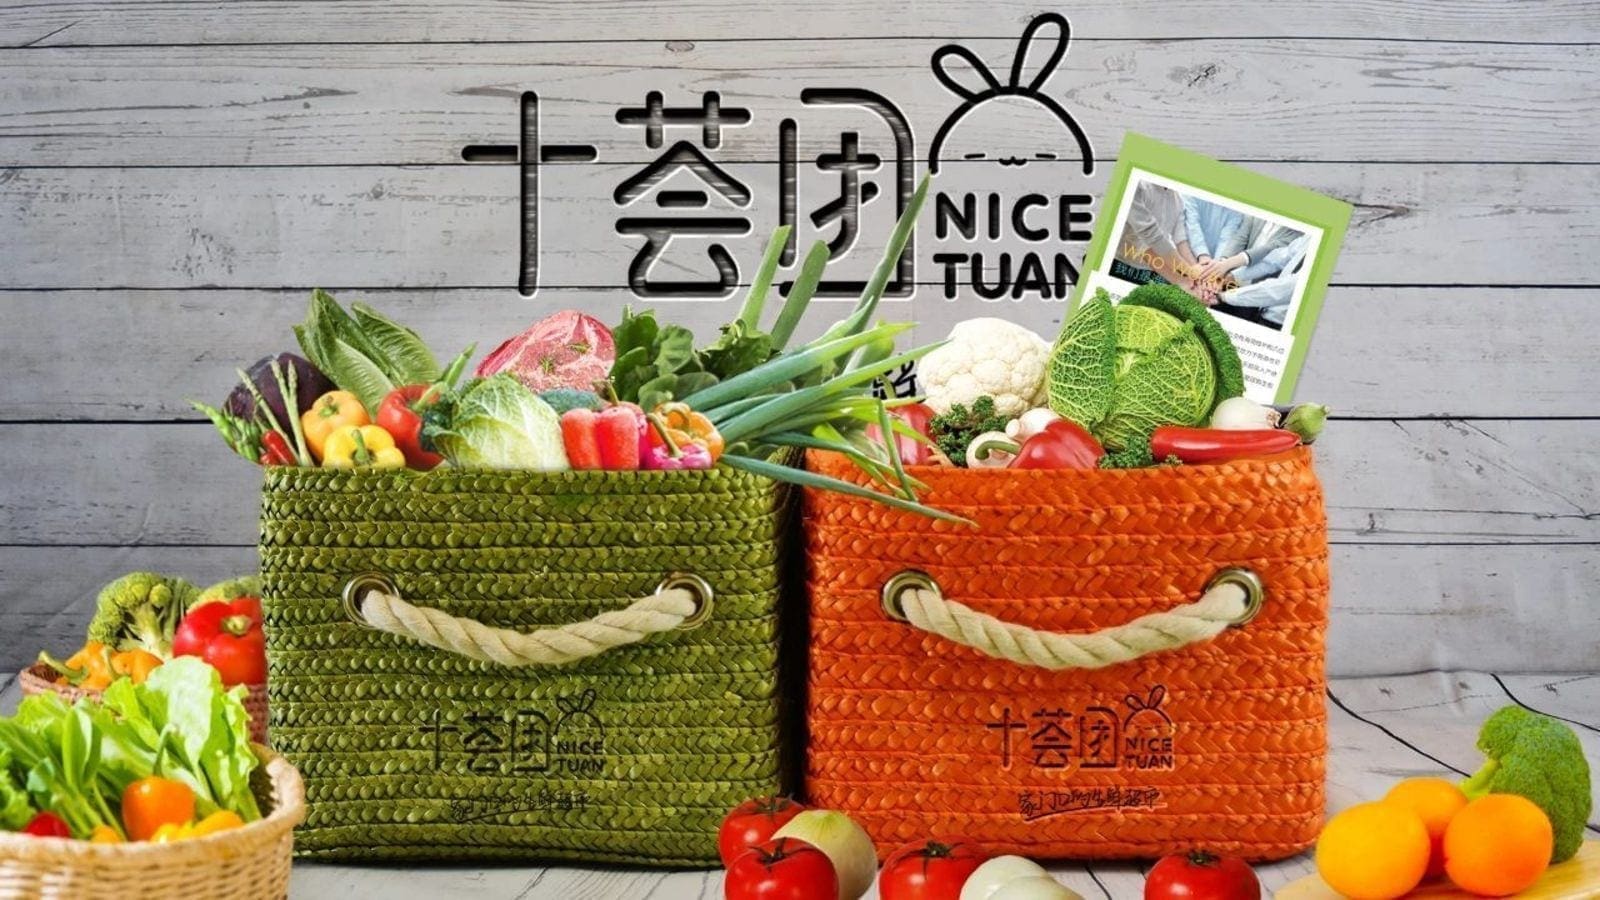 Alibaba, Jeneration Capital lead US$196m series C funding for Chinese food produce platform Nice Tuan